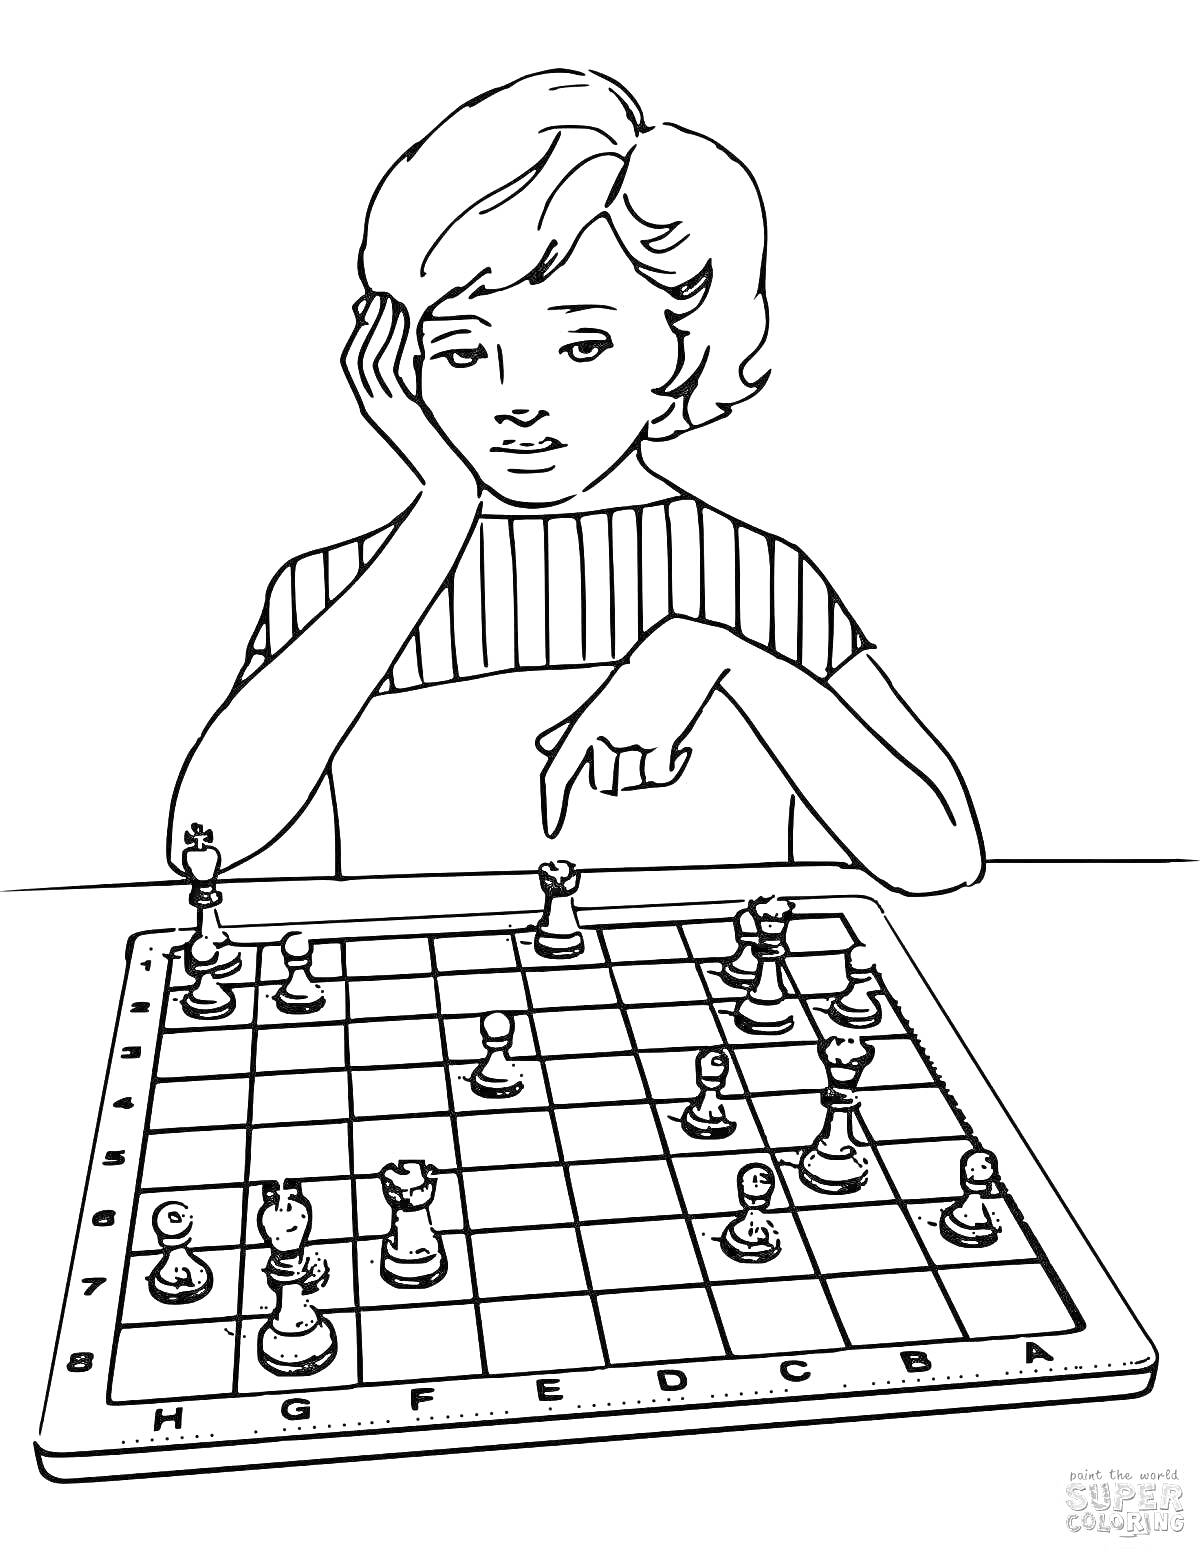 Ребенок, играющий в шахматы на шахматной доске